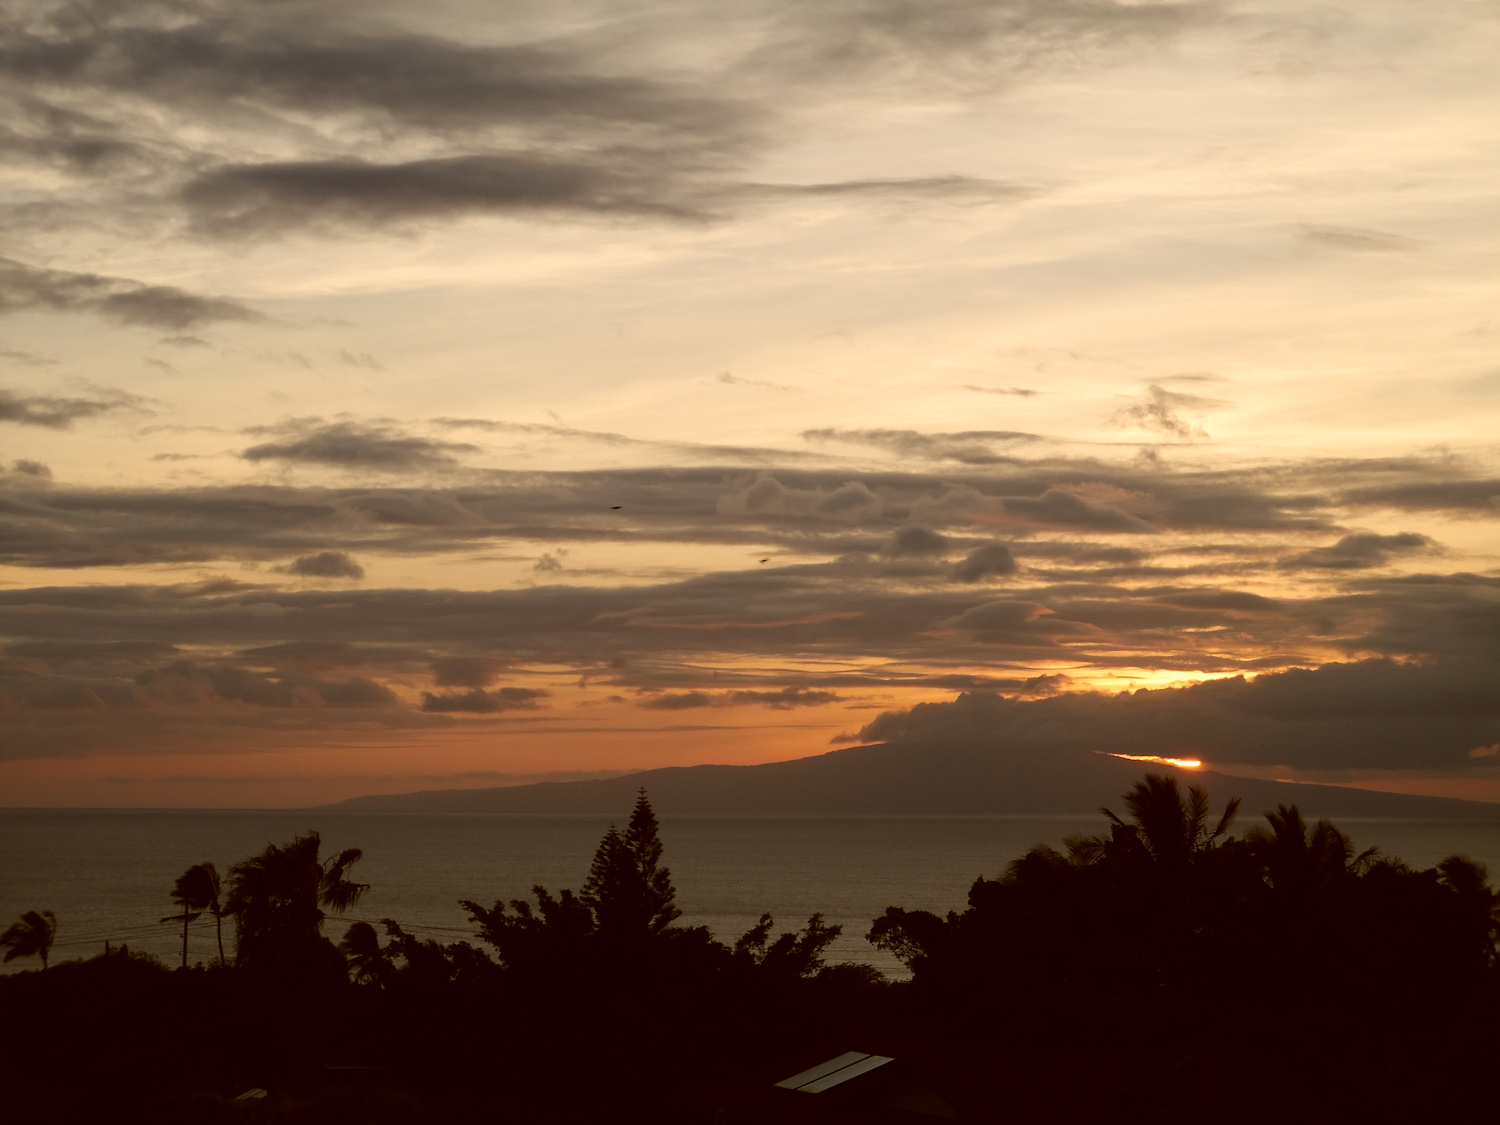 View towards Lanai at sunset.